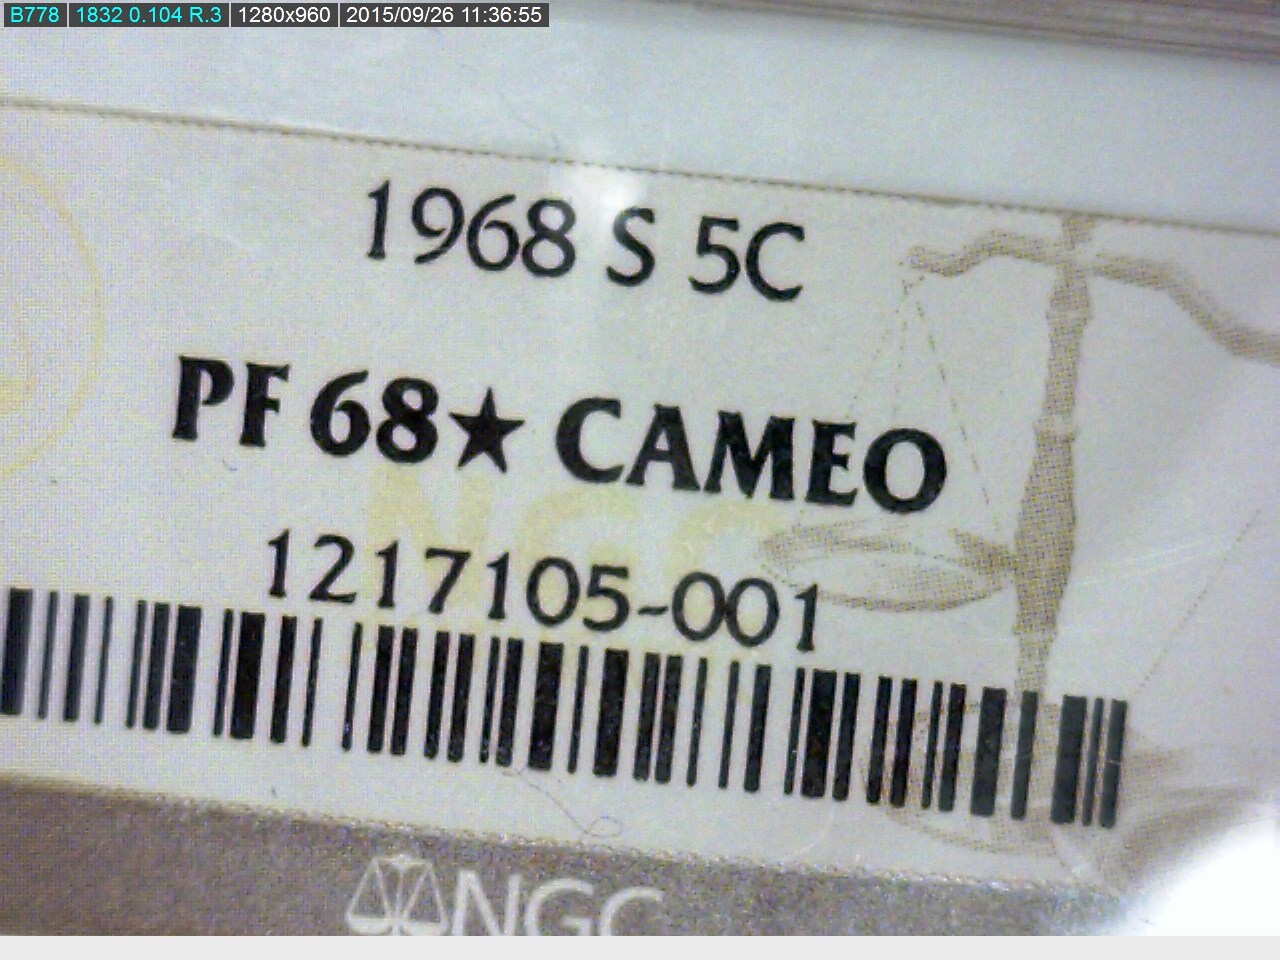 68 S Pr Camo star.jpg